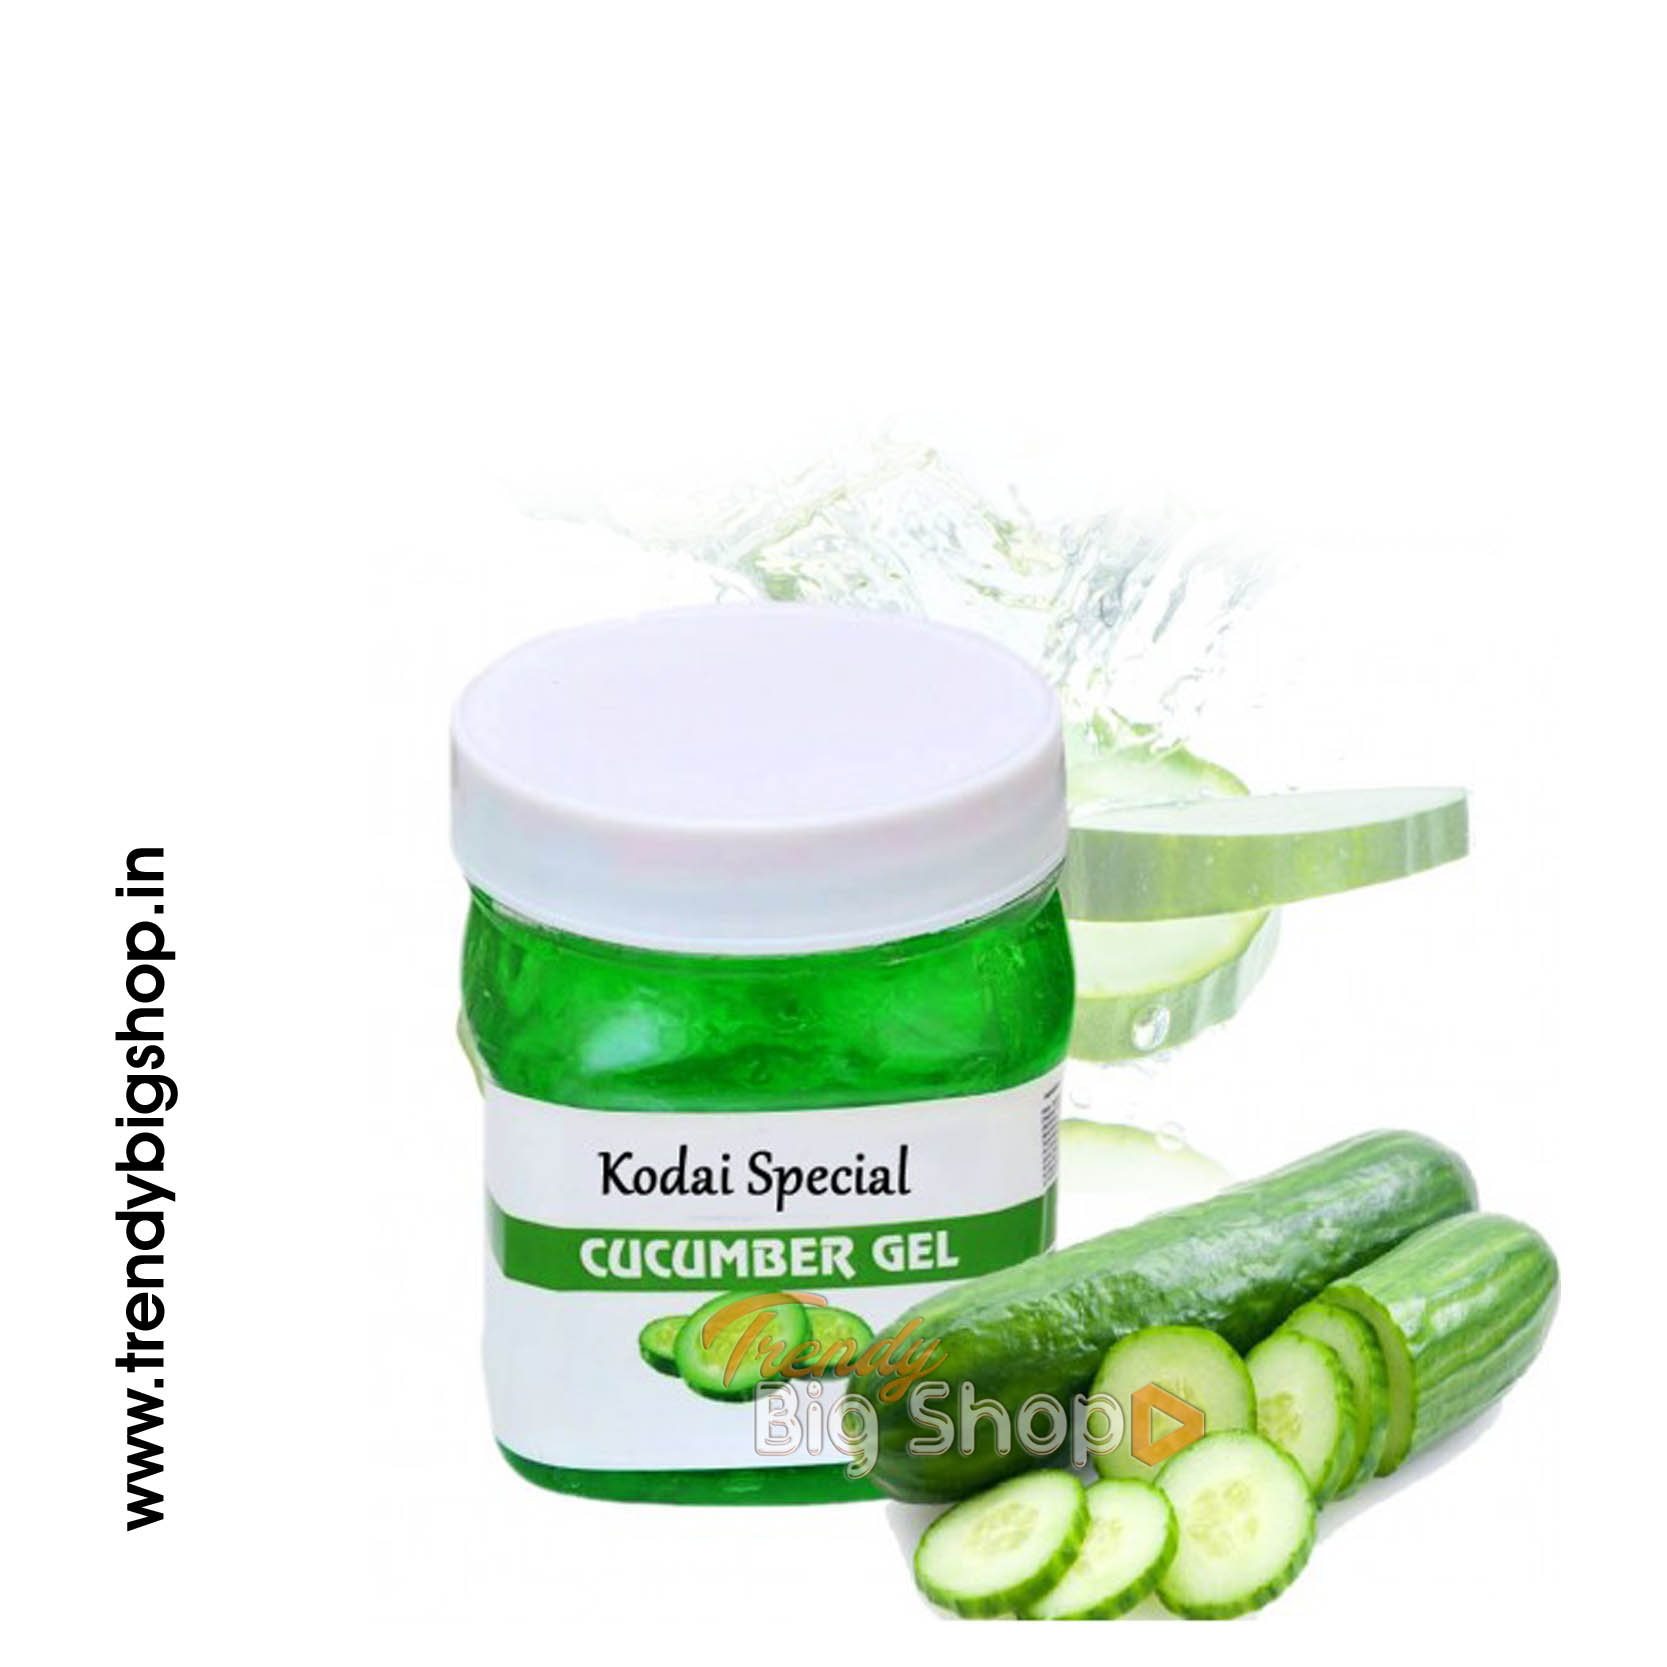 Cucumber Gel_500gm Natural and Organic product in Kodaikanal